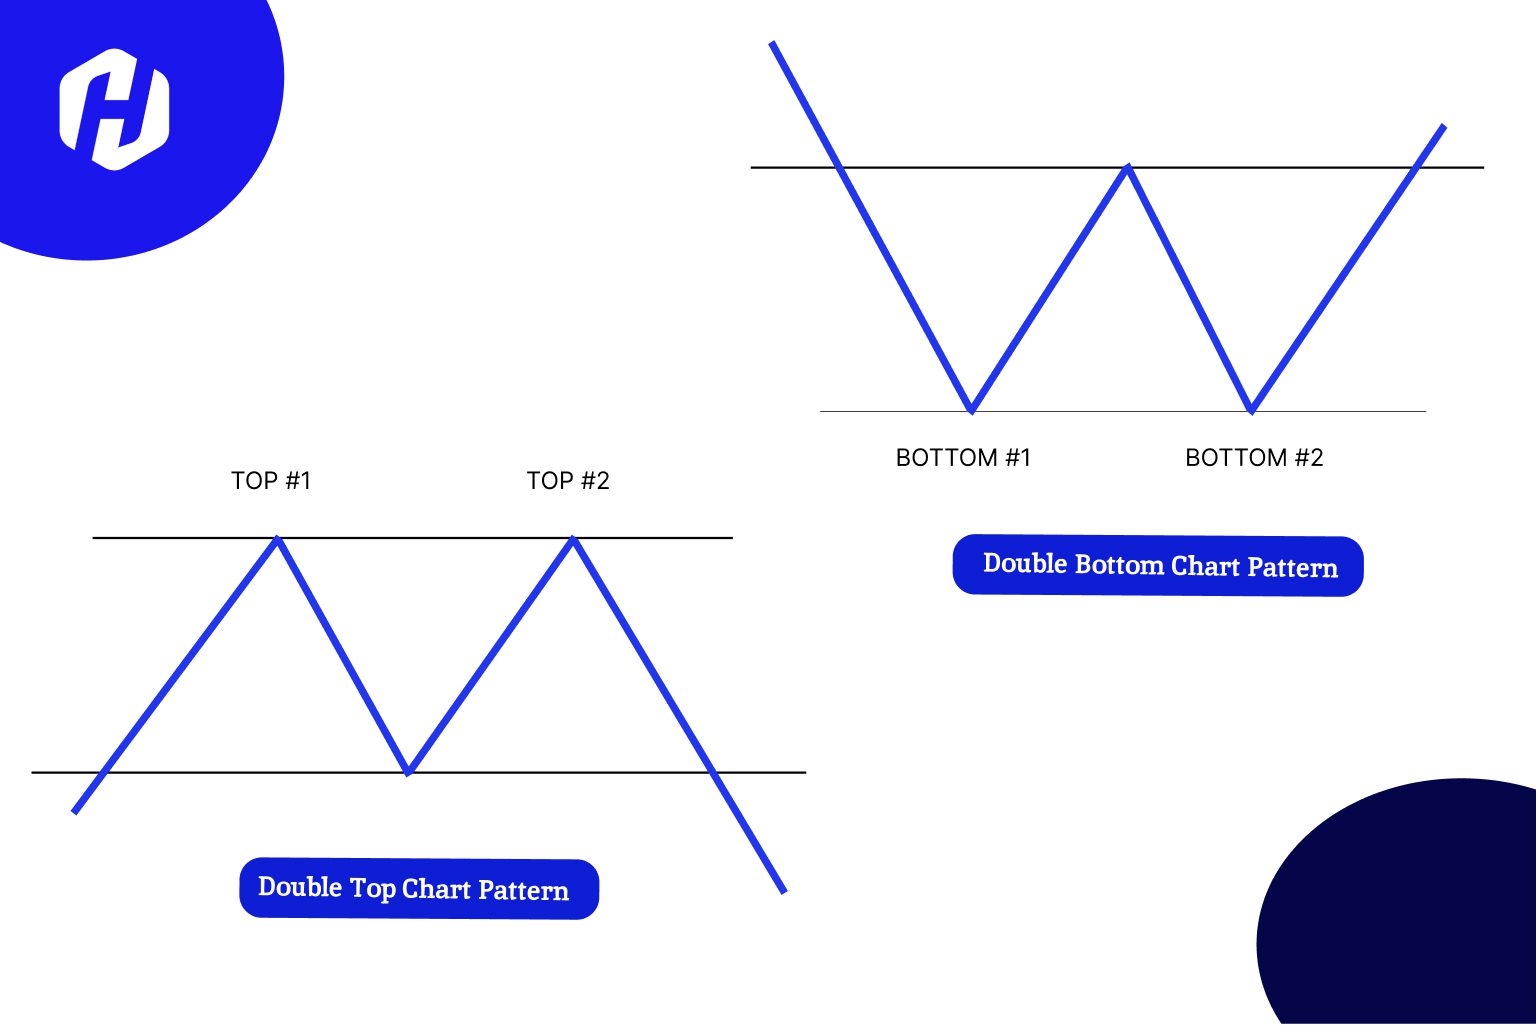 Perbedaan Pola Double Top & Bottom Chart Pattern